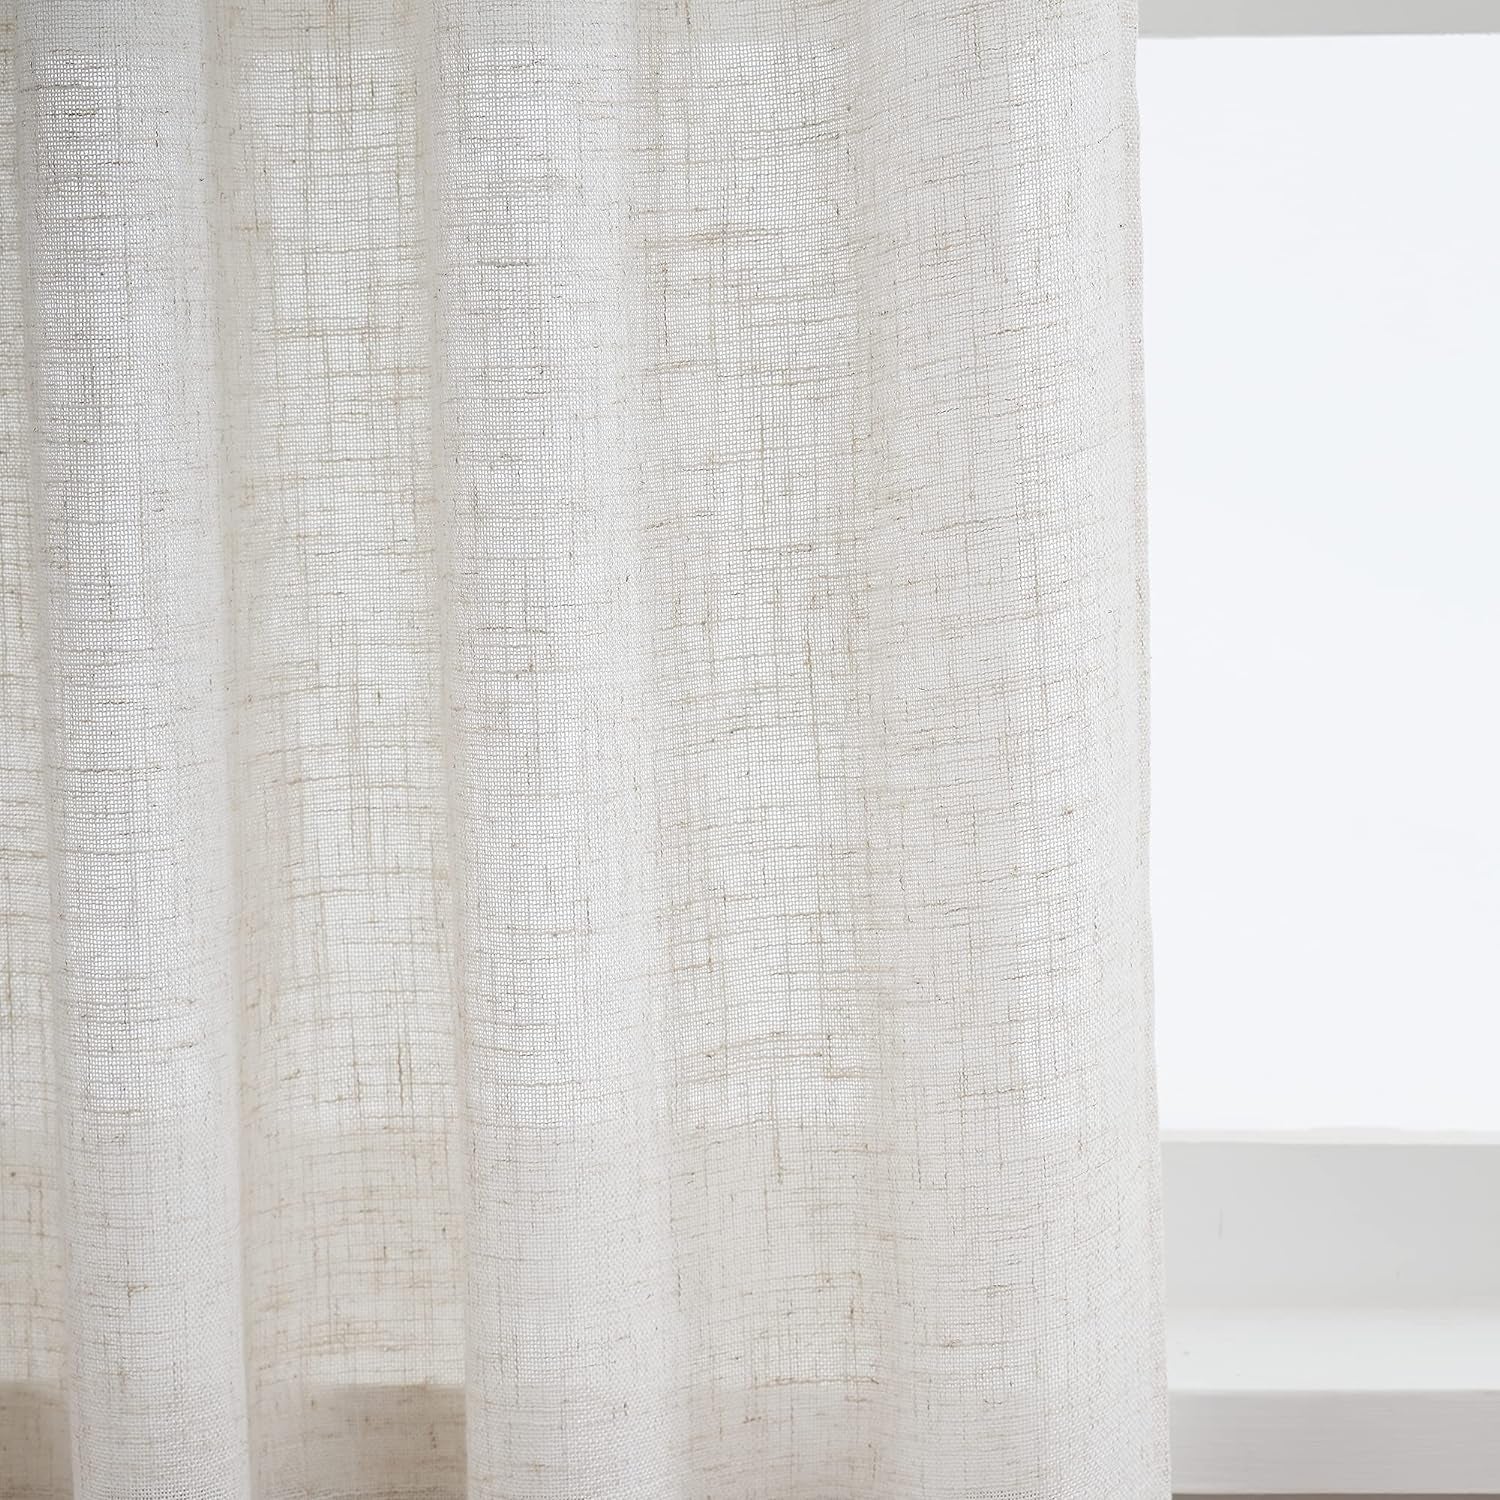 VOILYBIRD Natural Linen Semi Sheer Curtains Tab Top Light Filtering Elegant Curtains & Drapes for Living Room 52 X 84 Inch Length, Set of 2 Panels  VOILYBIRD   